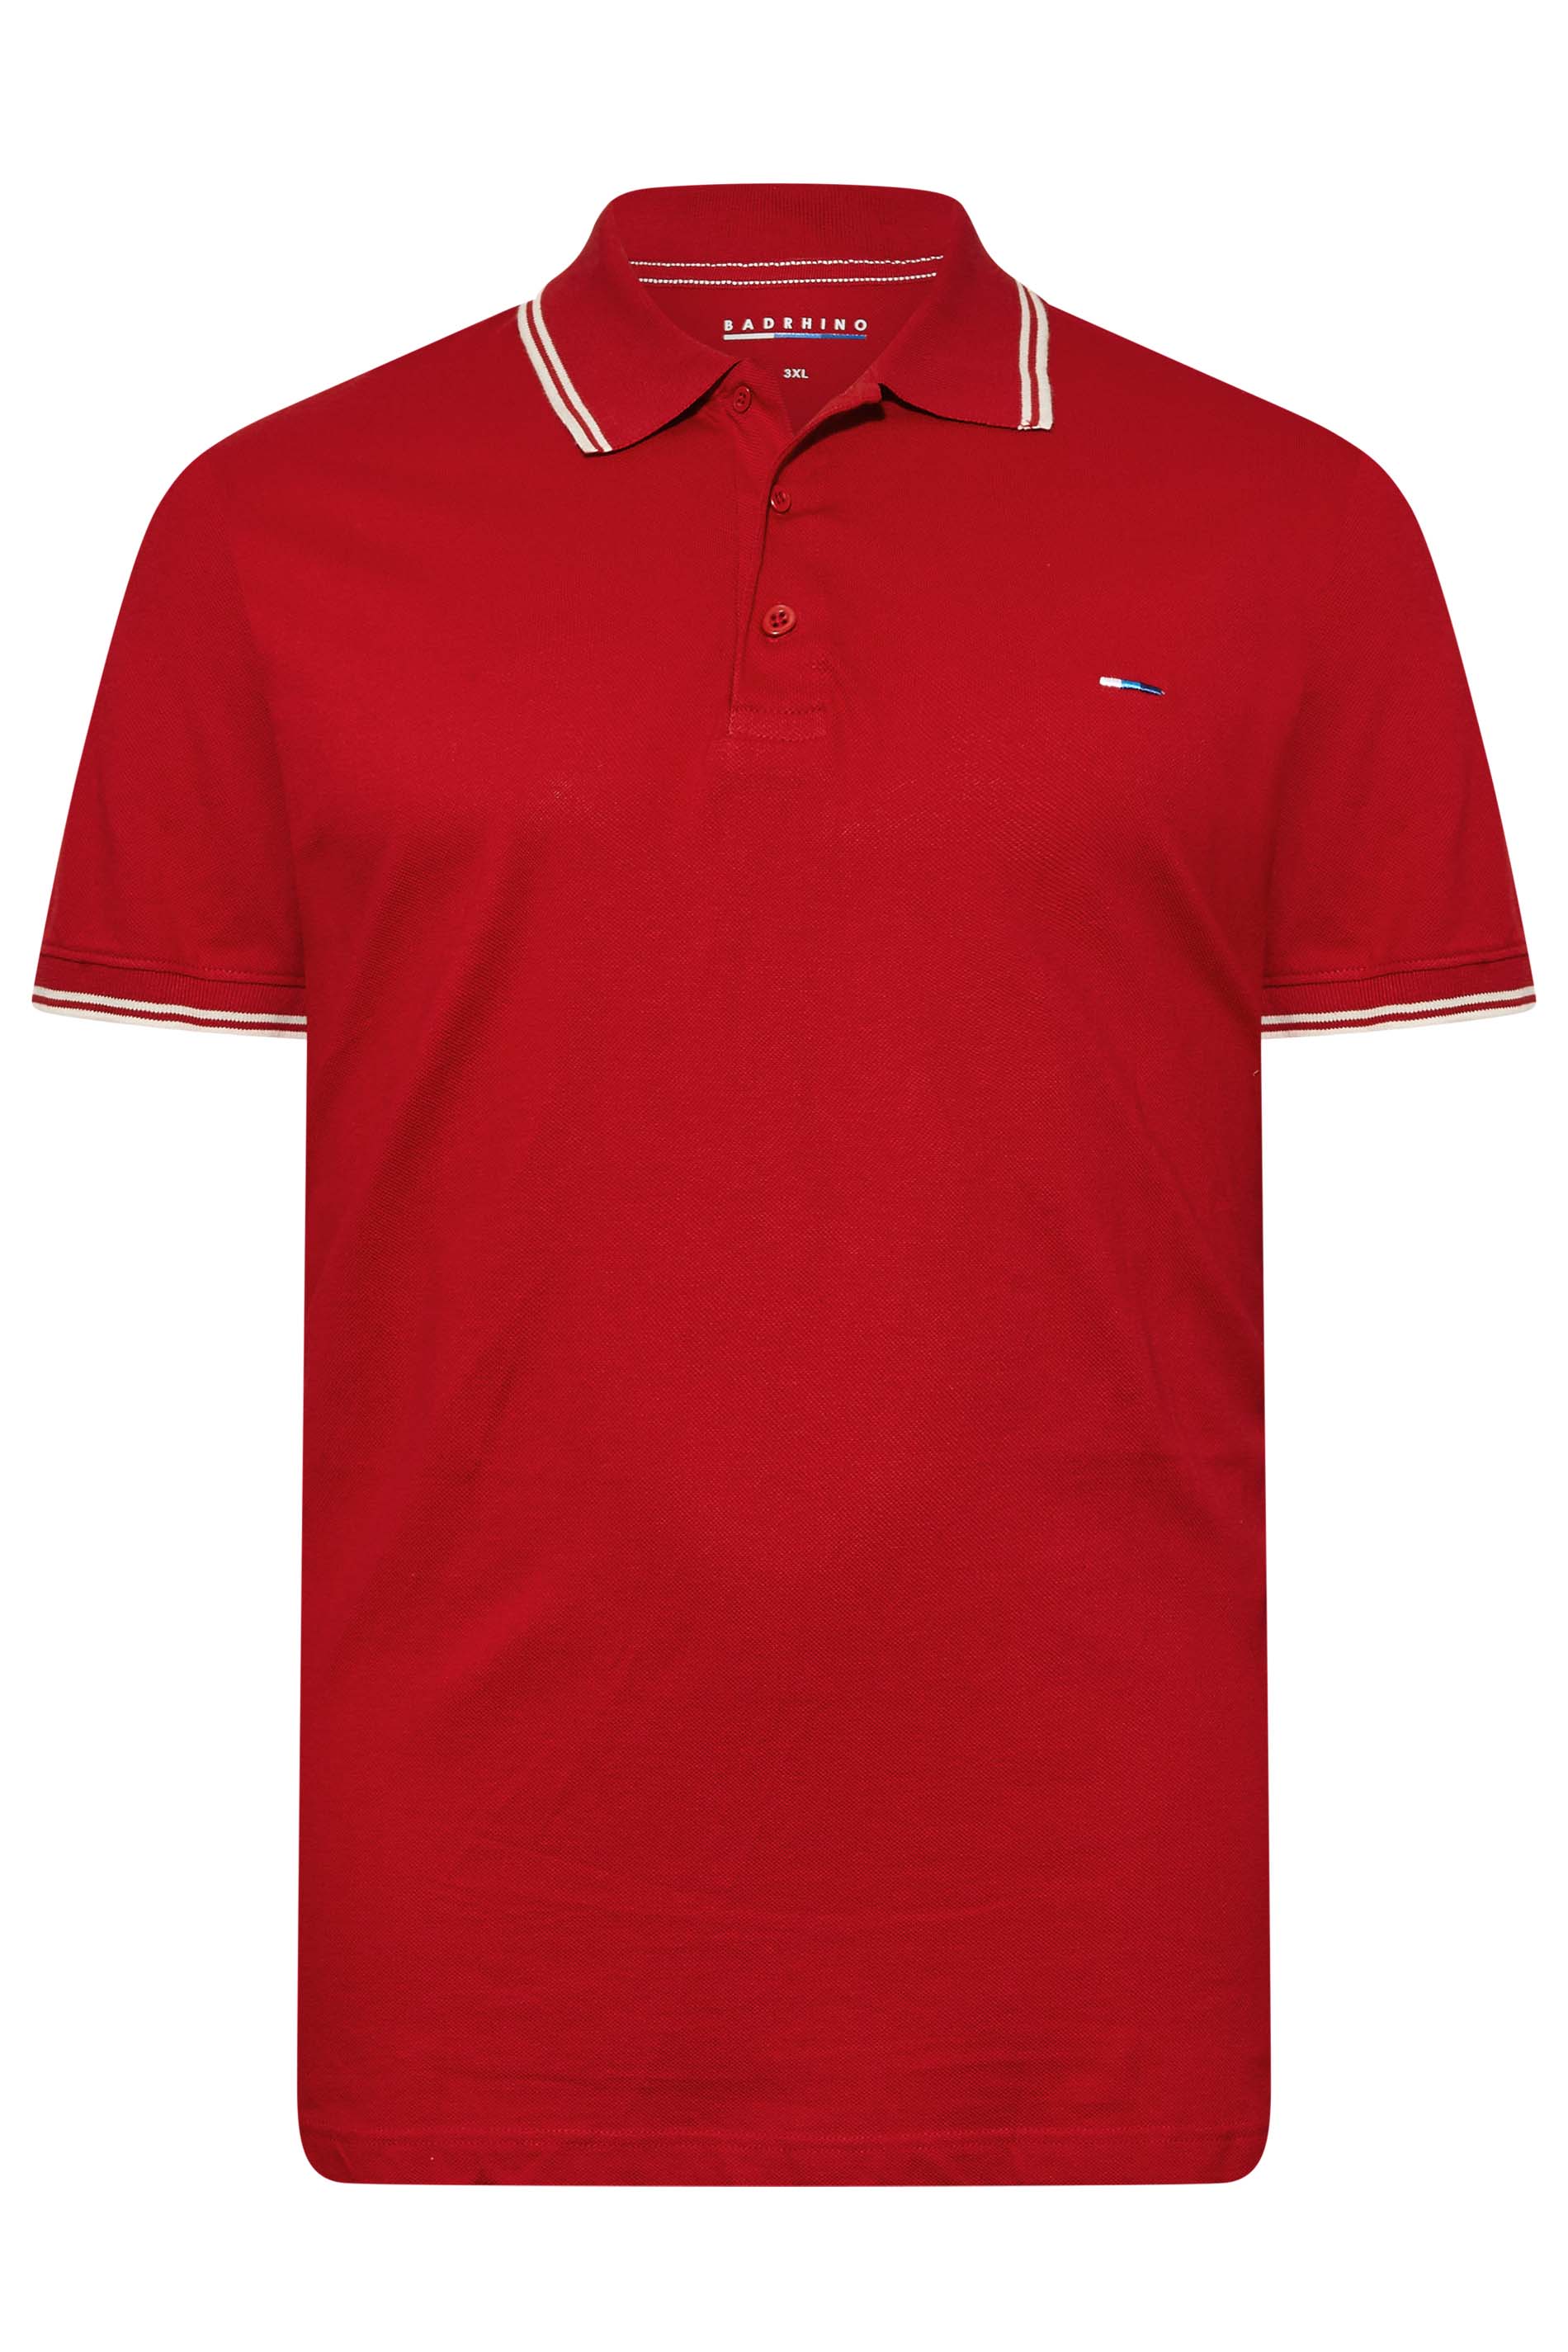 BadRhino Blue & Red 3 Pack Essential Tipped Polo Shirts | BadRhino